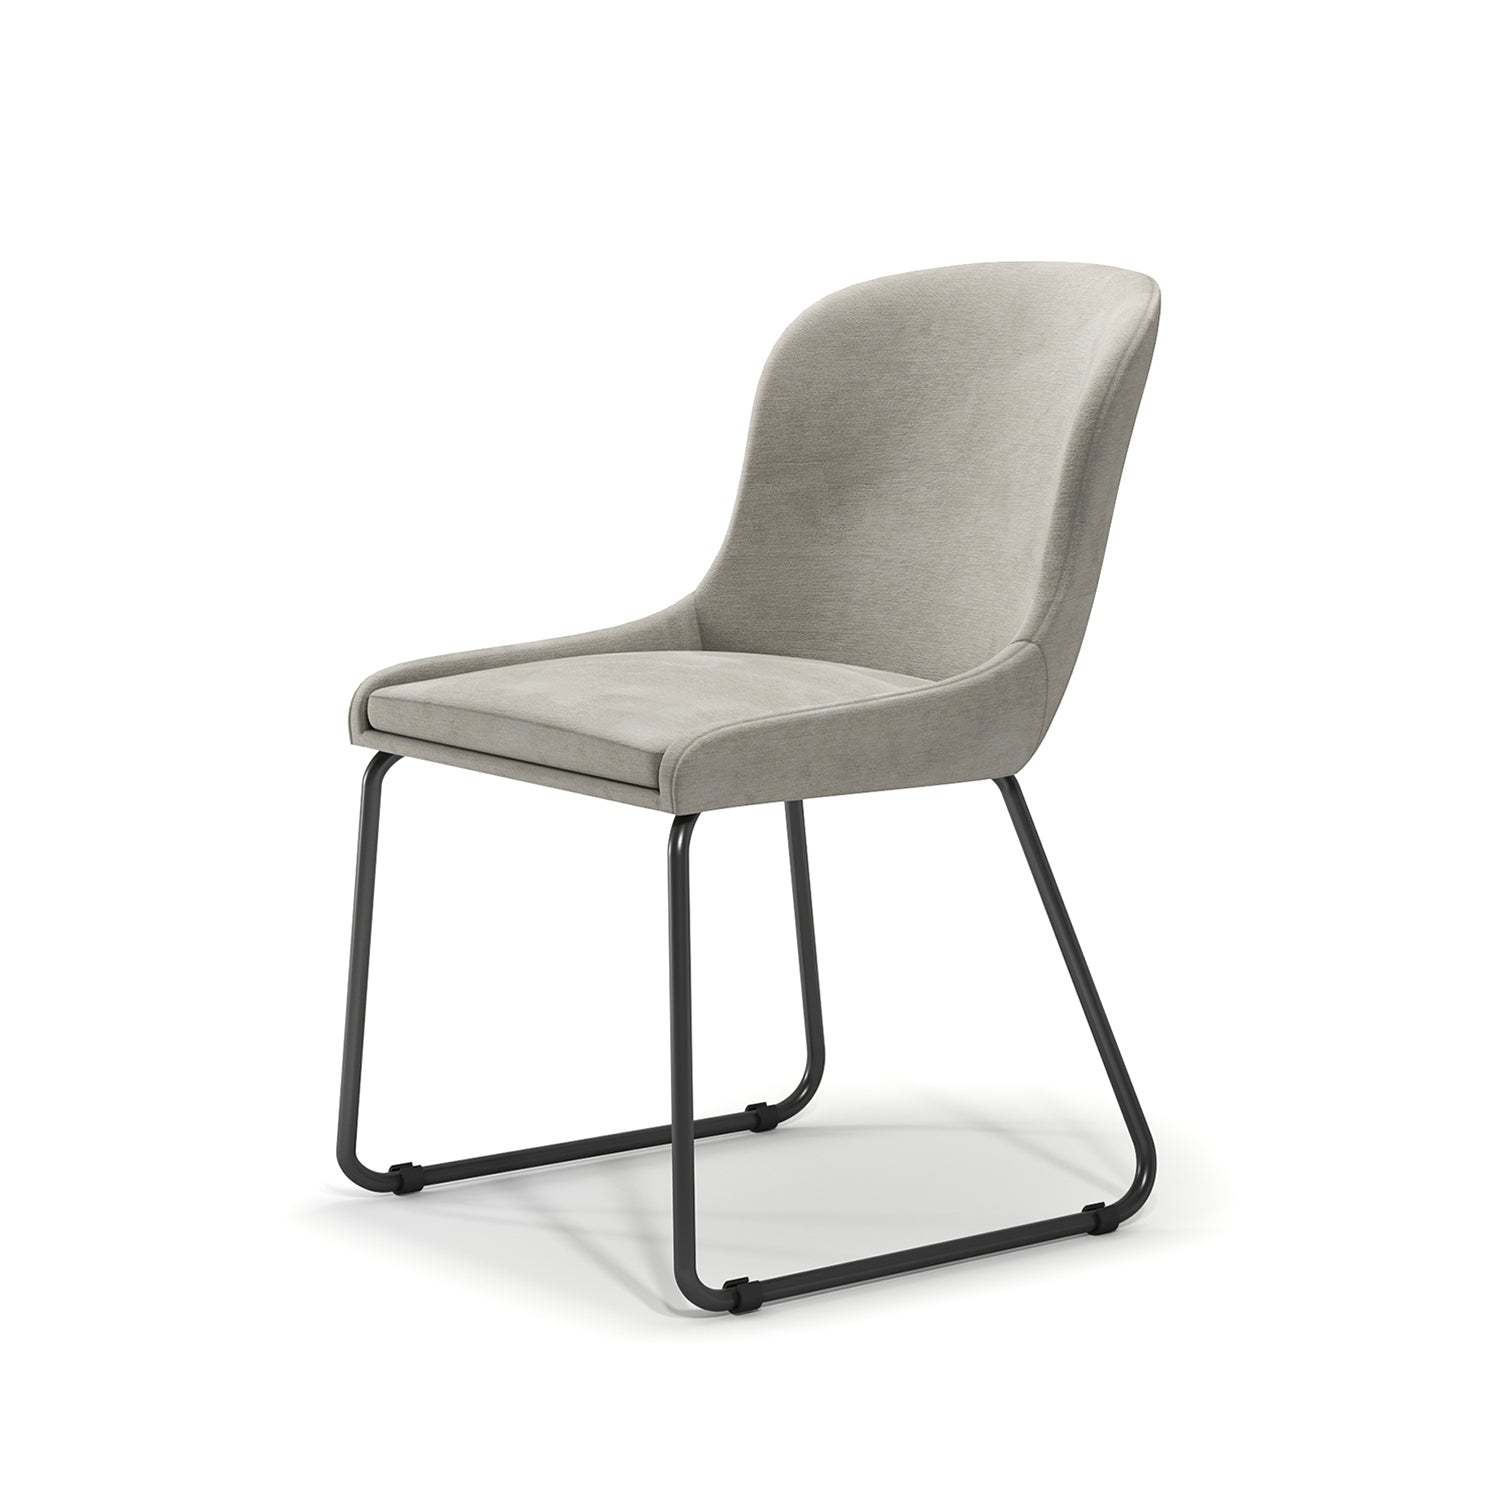 Designer Stuhl - Marco Metal L2 - verschiedene Farben